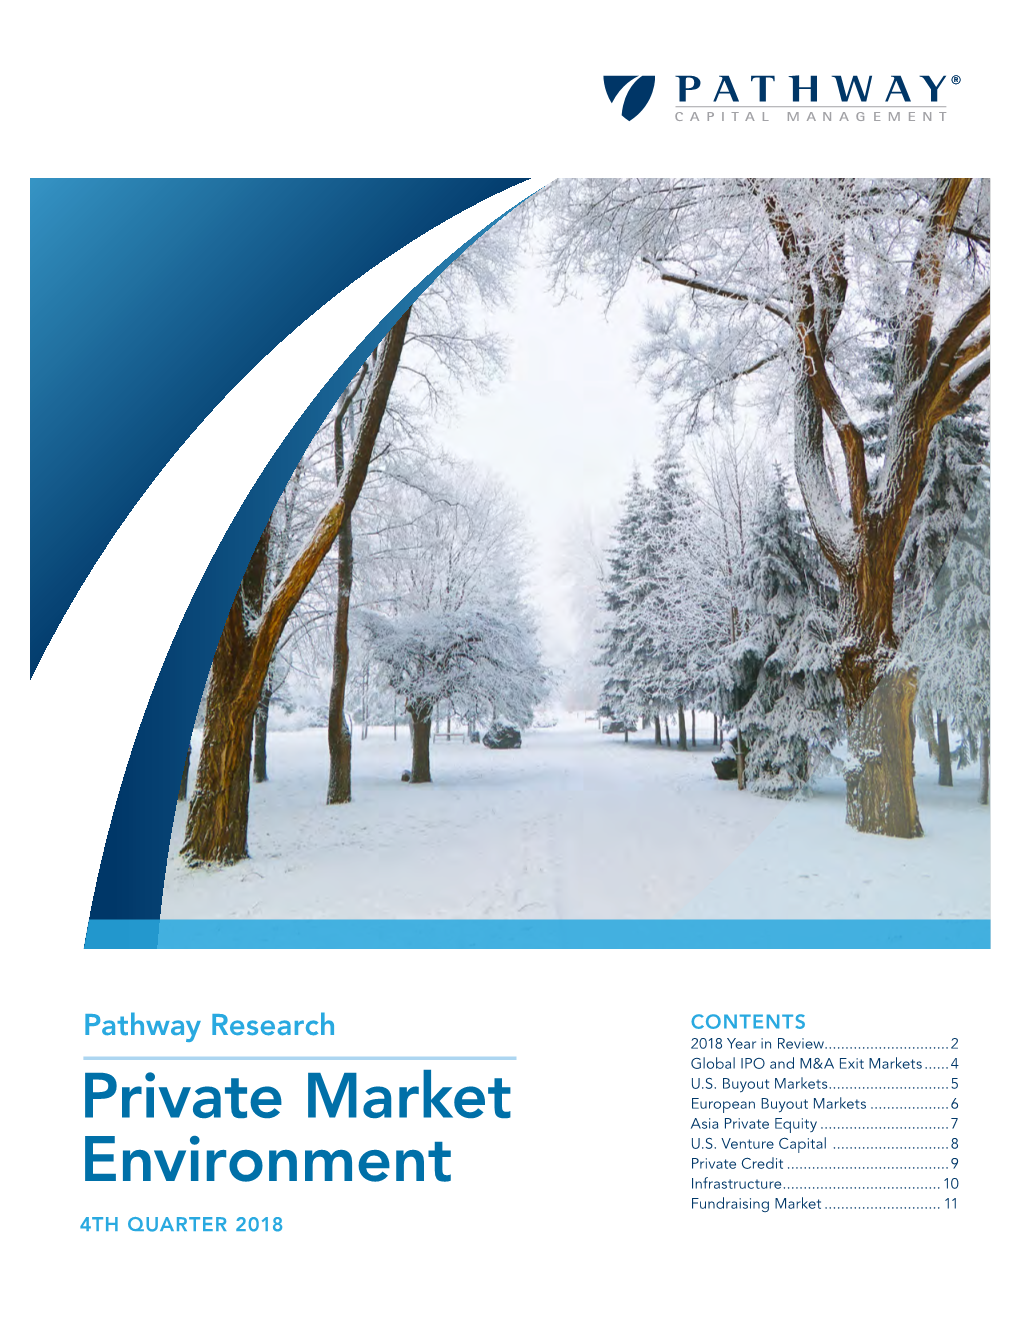 Private Market Environment